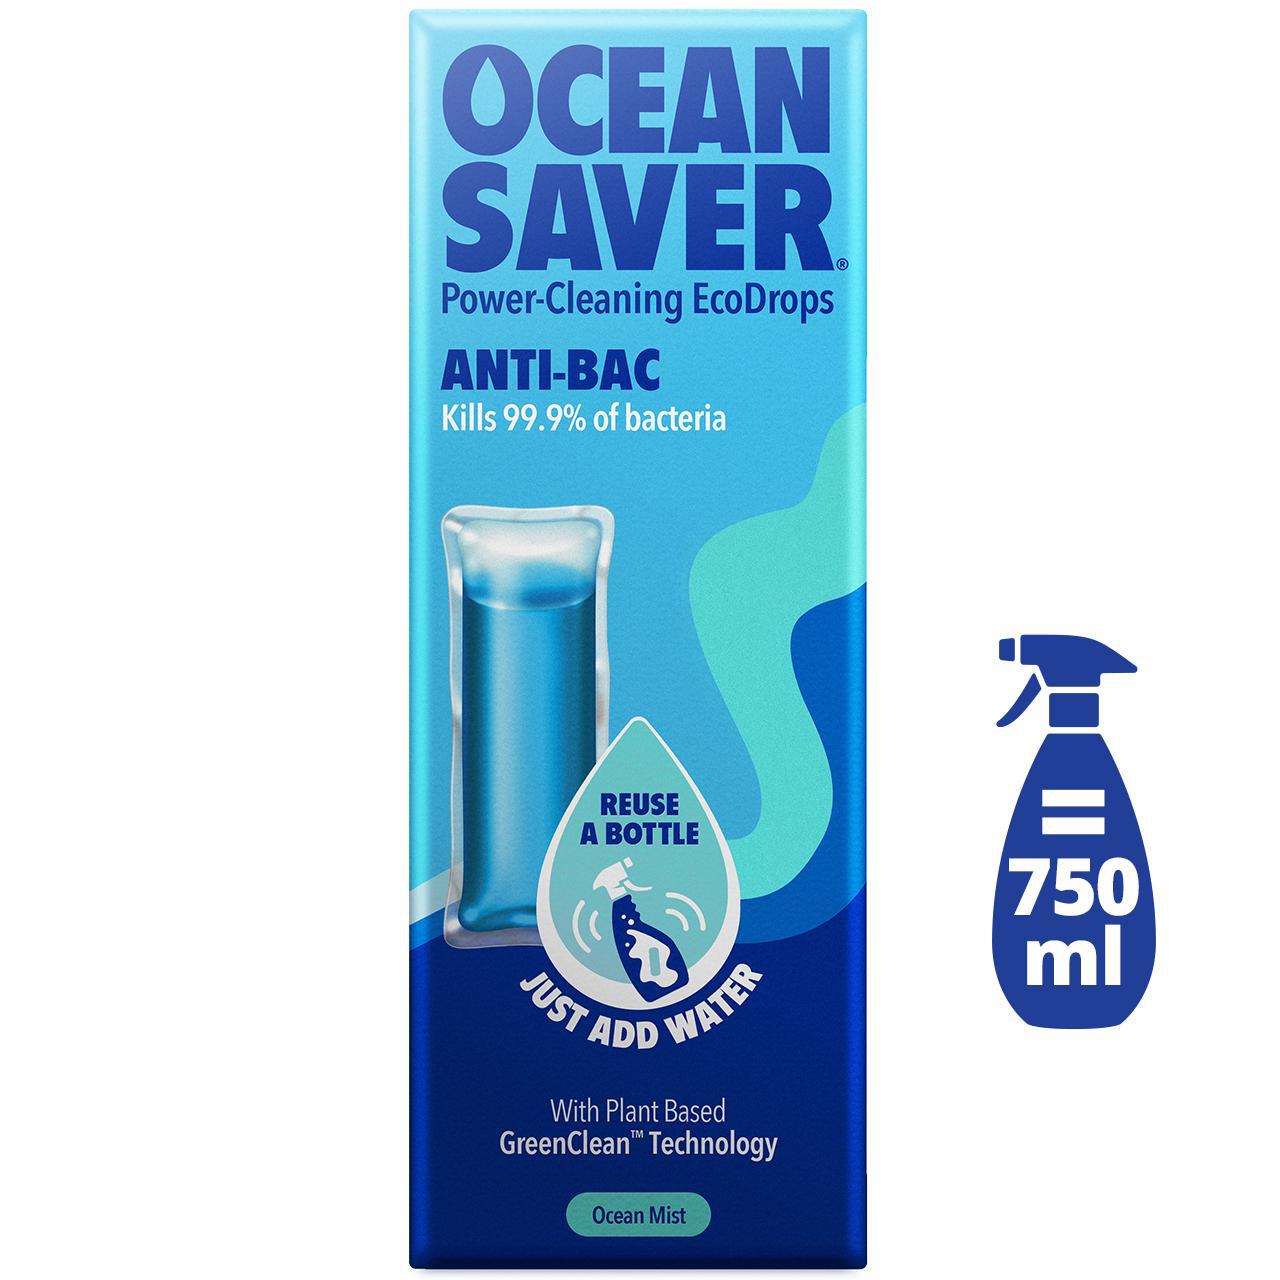 OceanSaver Anti-Bac EcoDrop, Ocean Mist 10ml